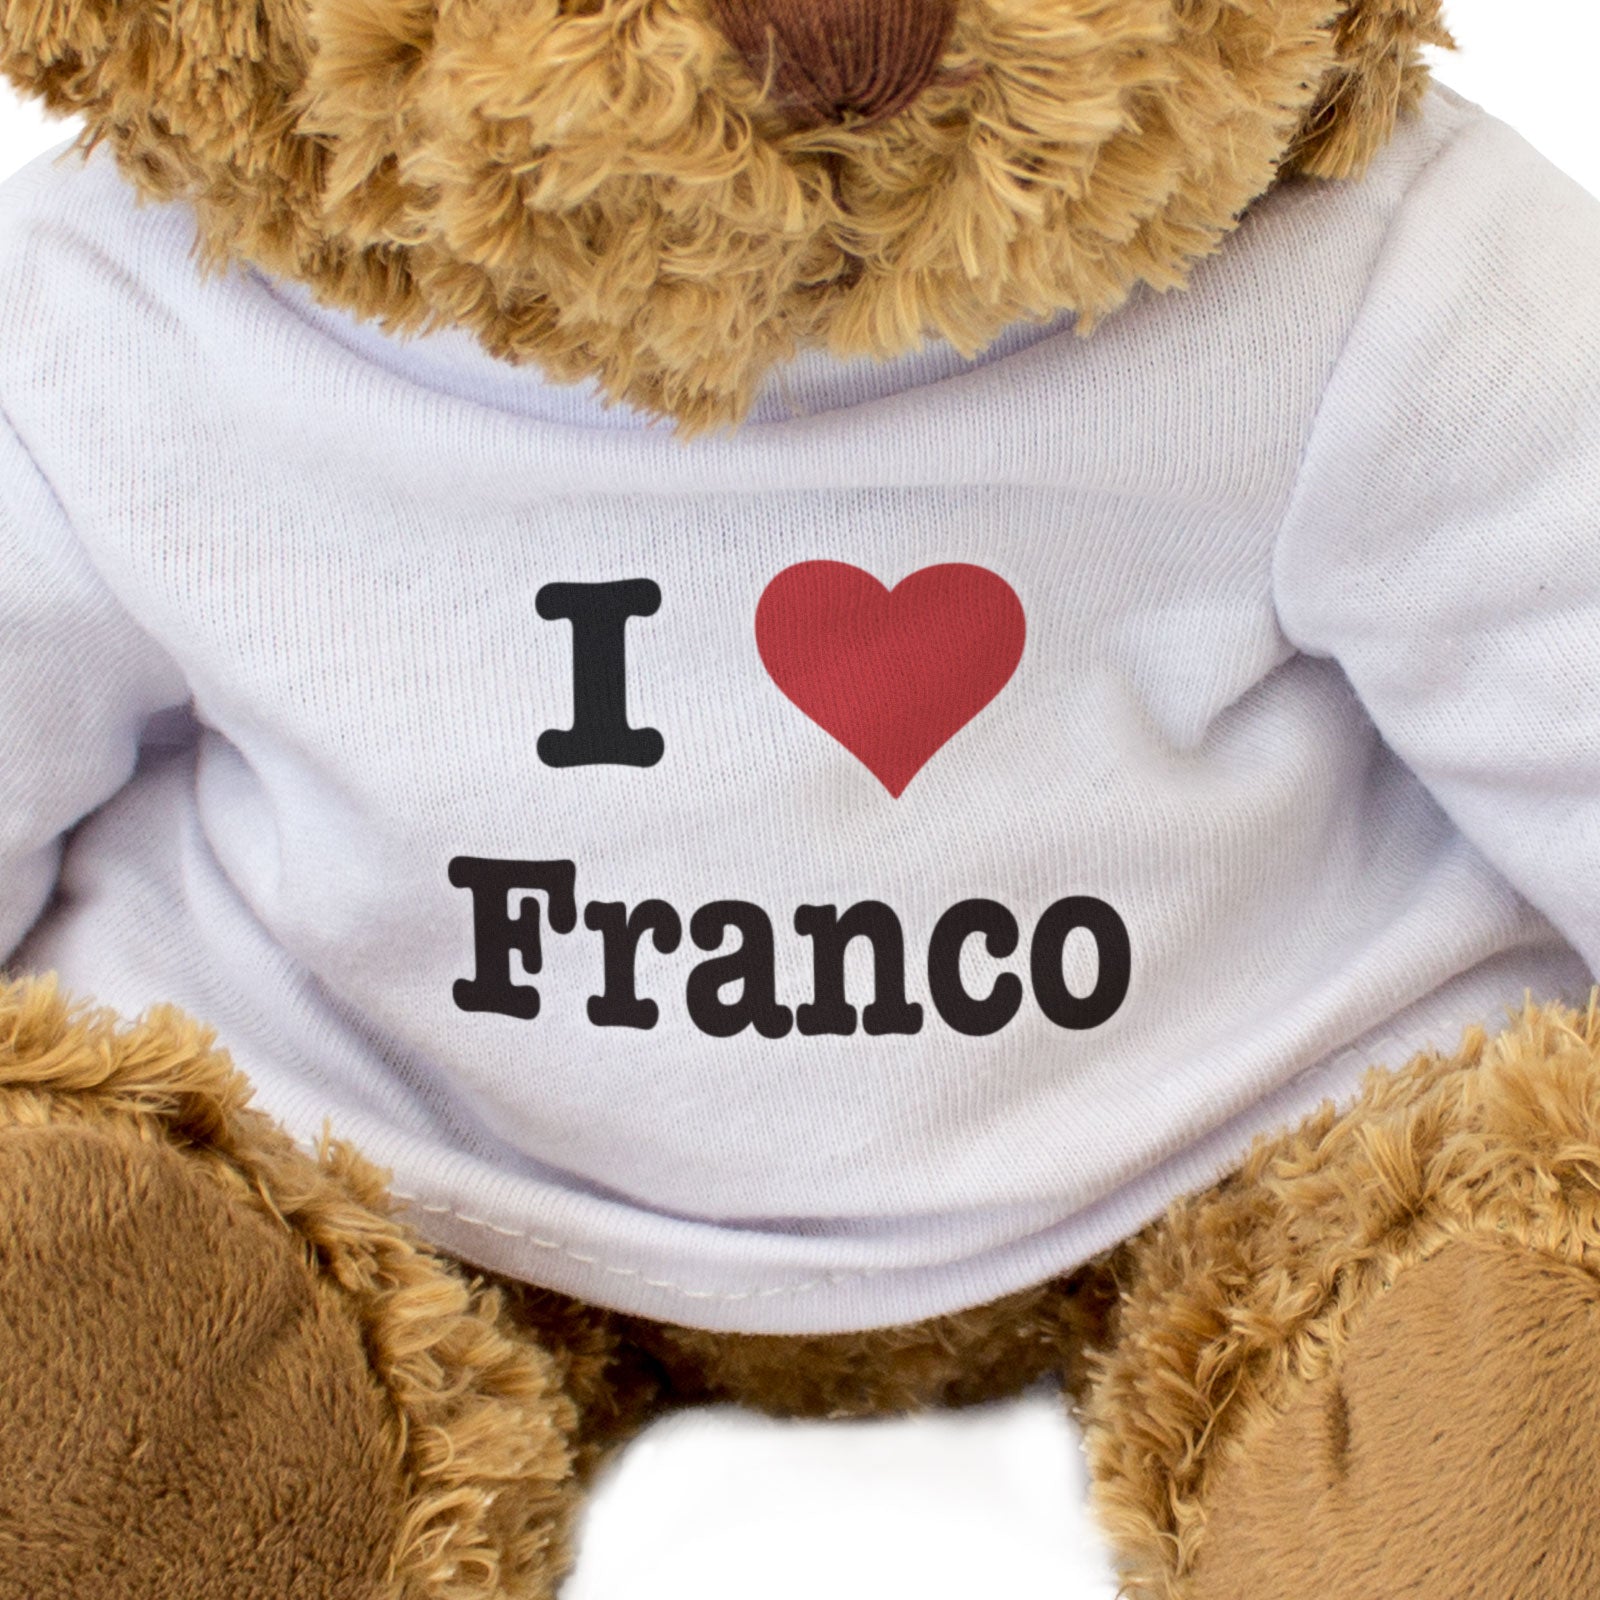 I Love Franco - Teddy Bear